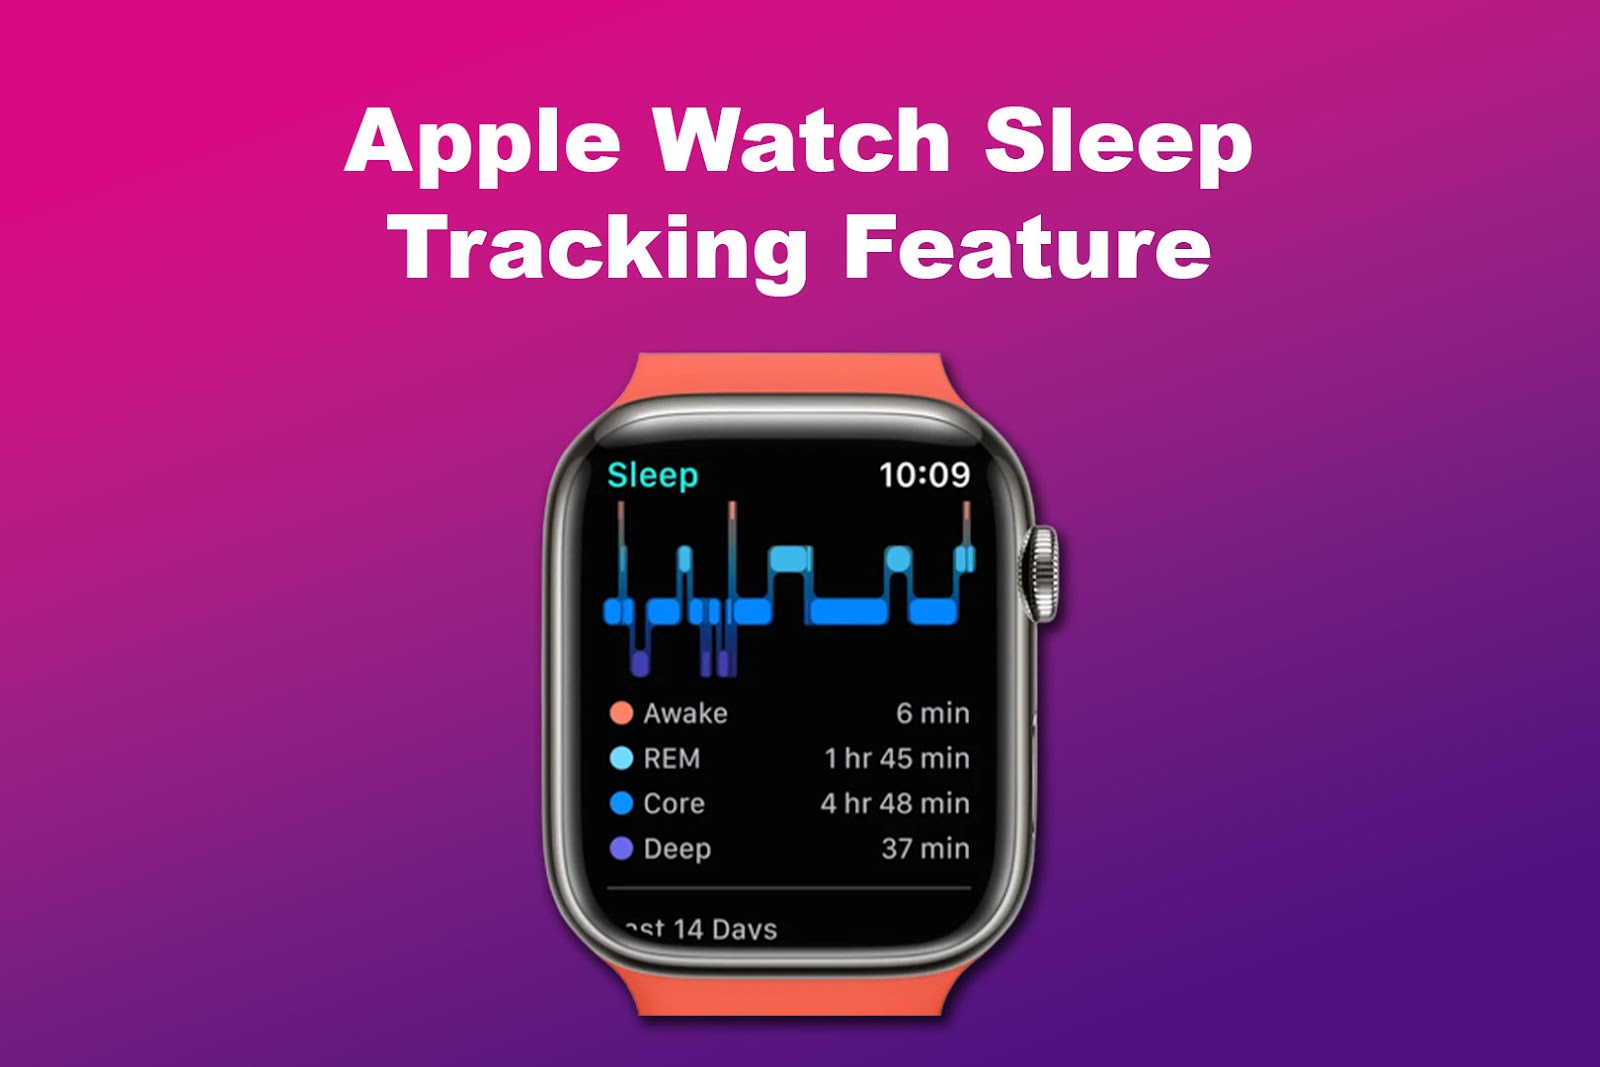 Apple Watch Sleep Tracking Feature